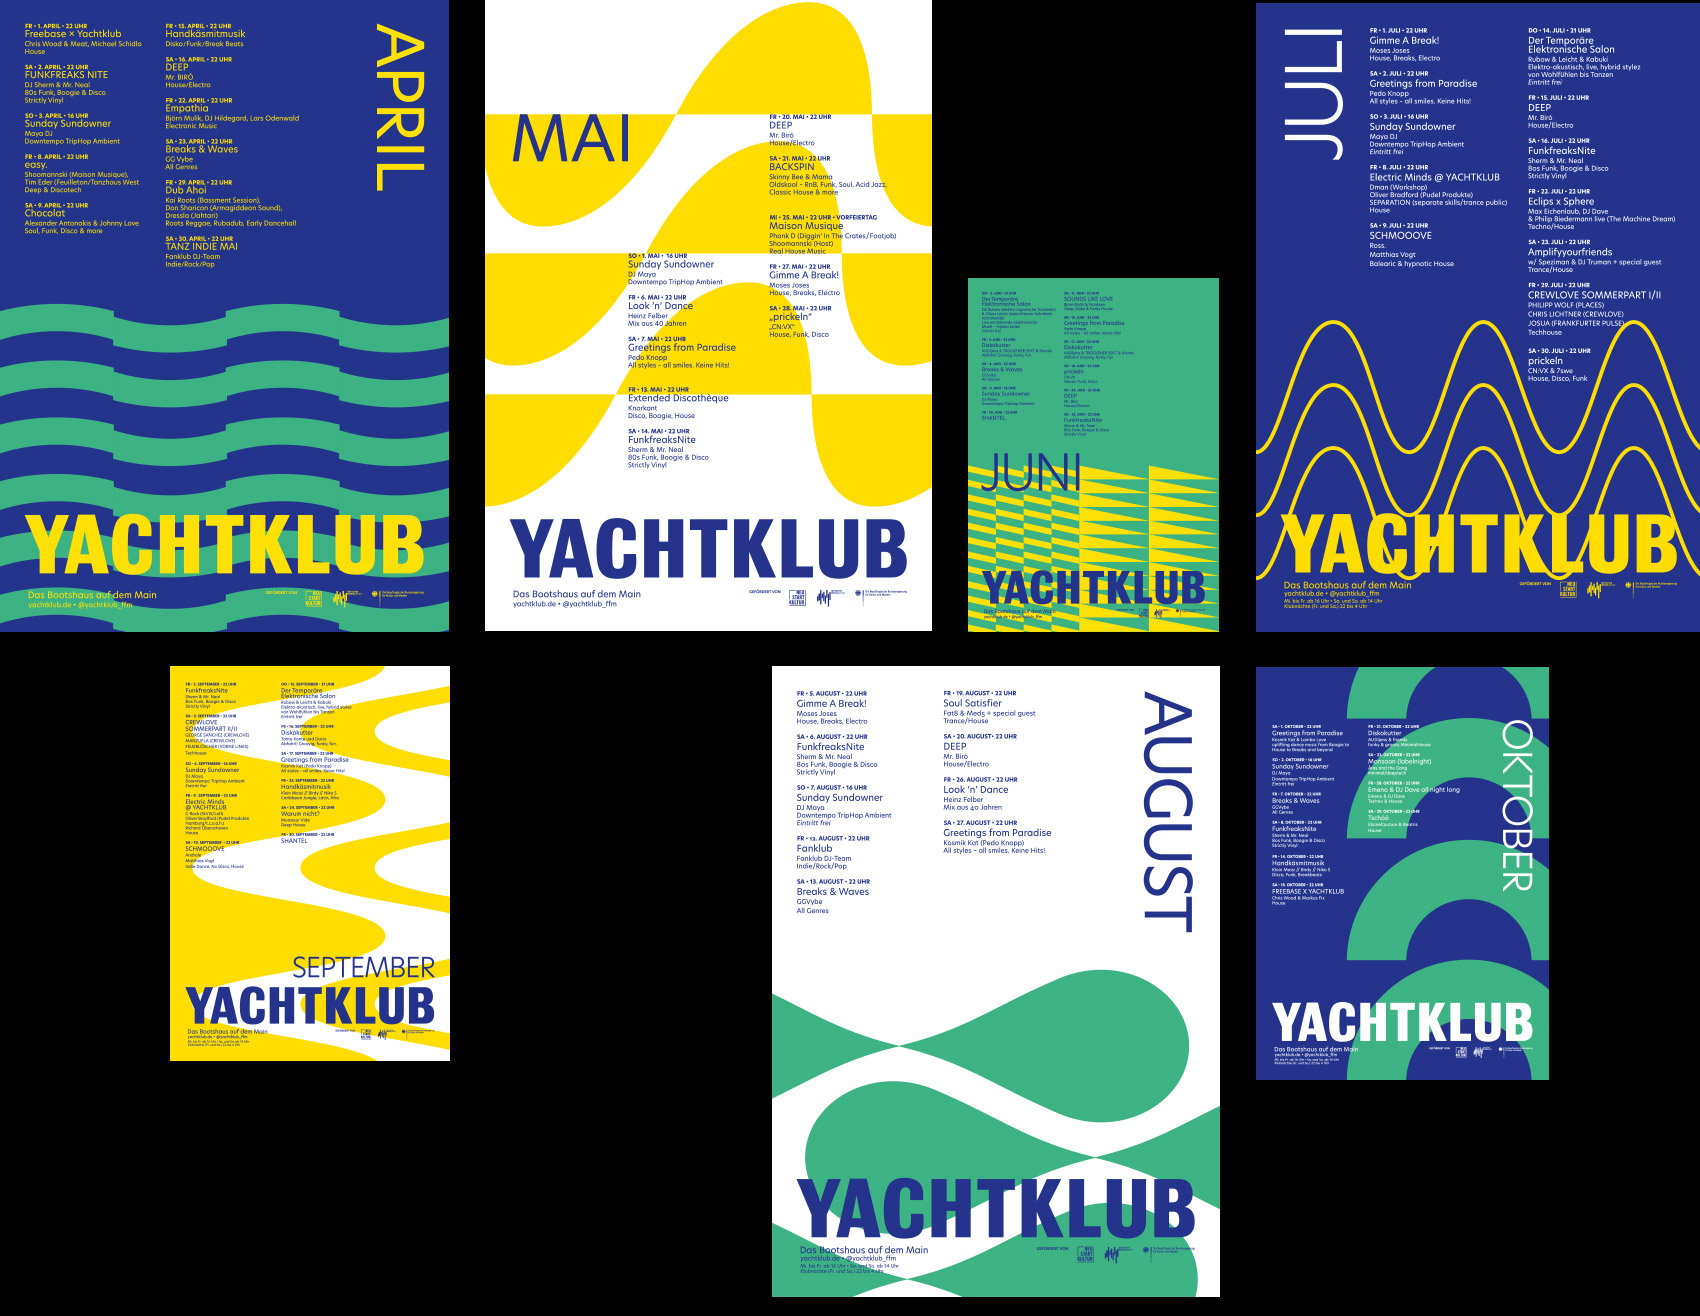 tilov_yachtklub_posters6